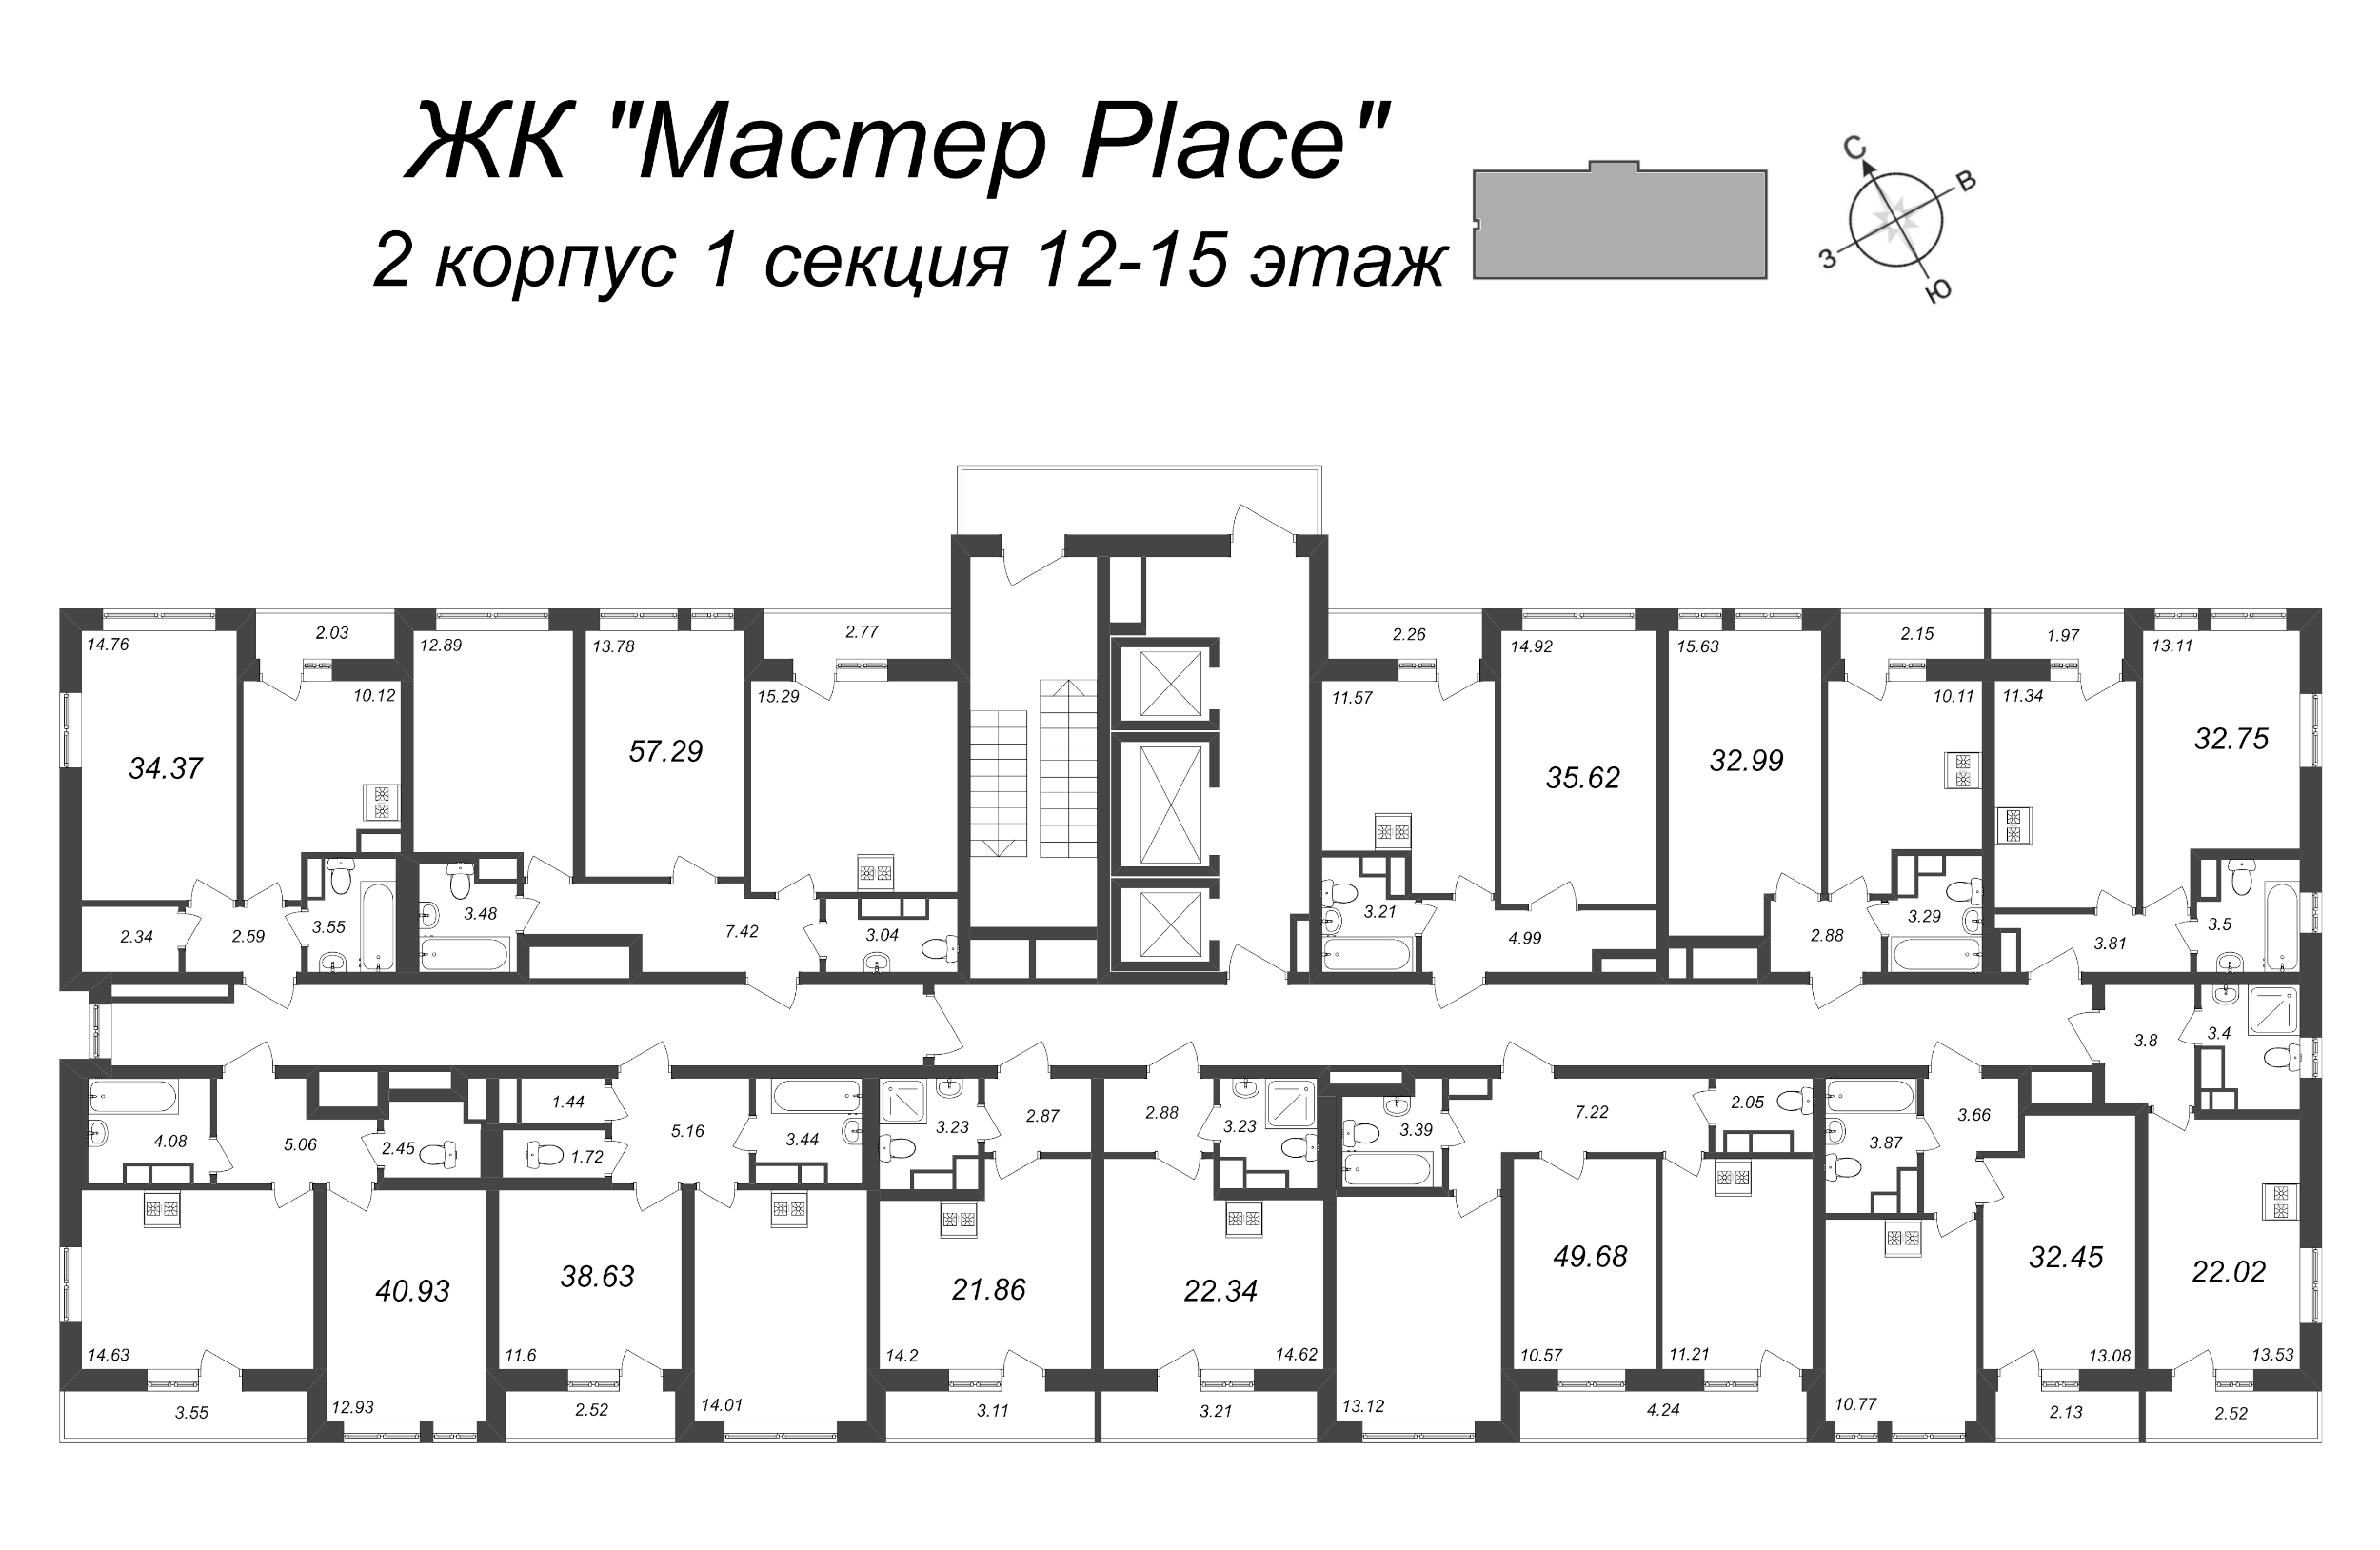 2-комнатная (Евро) квартира, 38.63 м² - планировка этажа